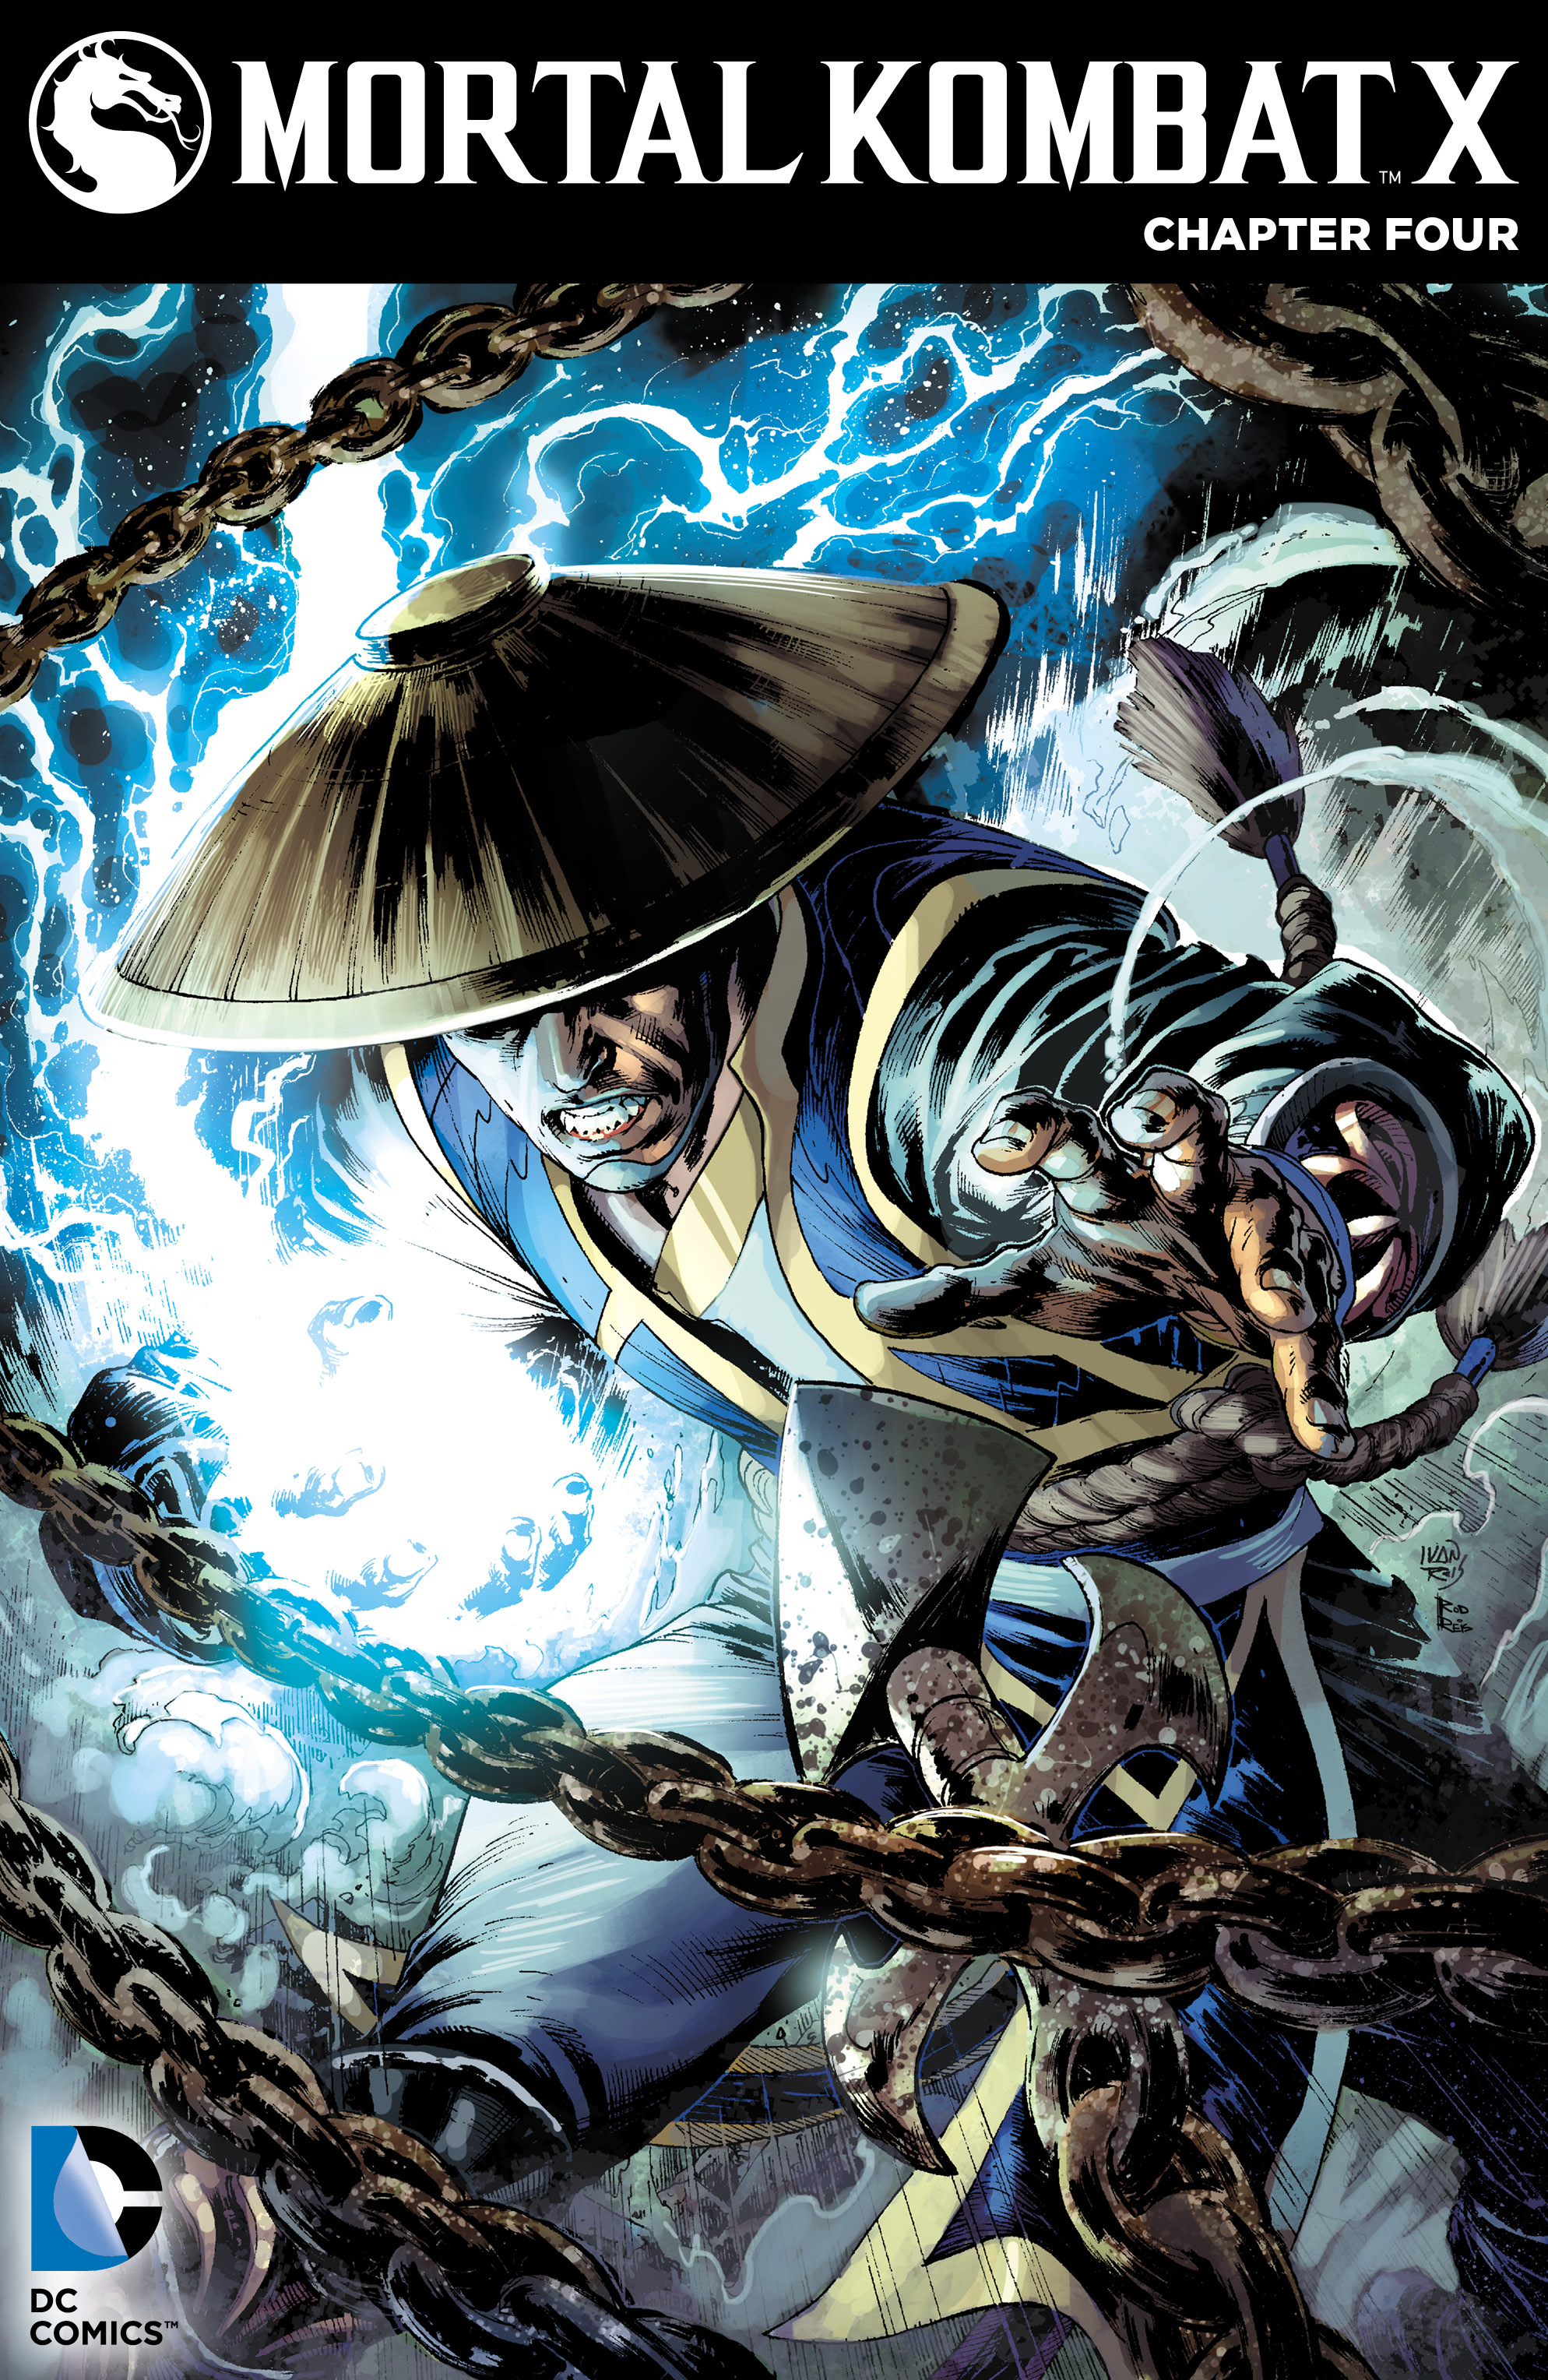 Mortal Kombat X #4 preview images